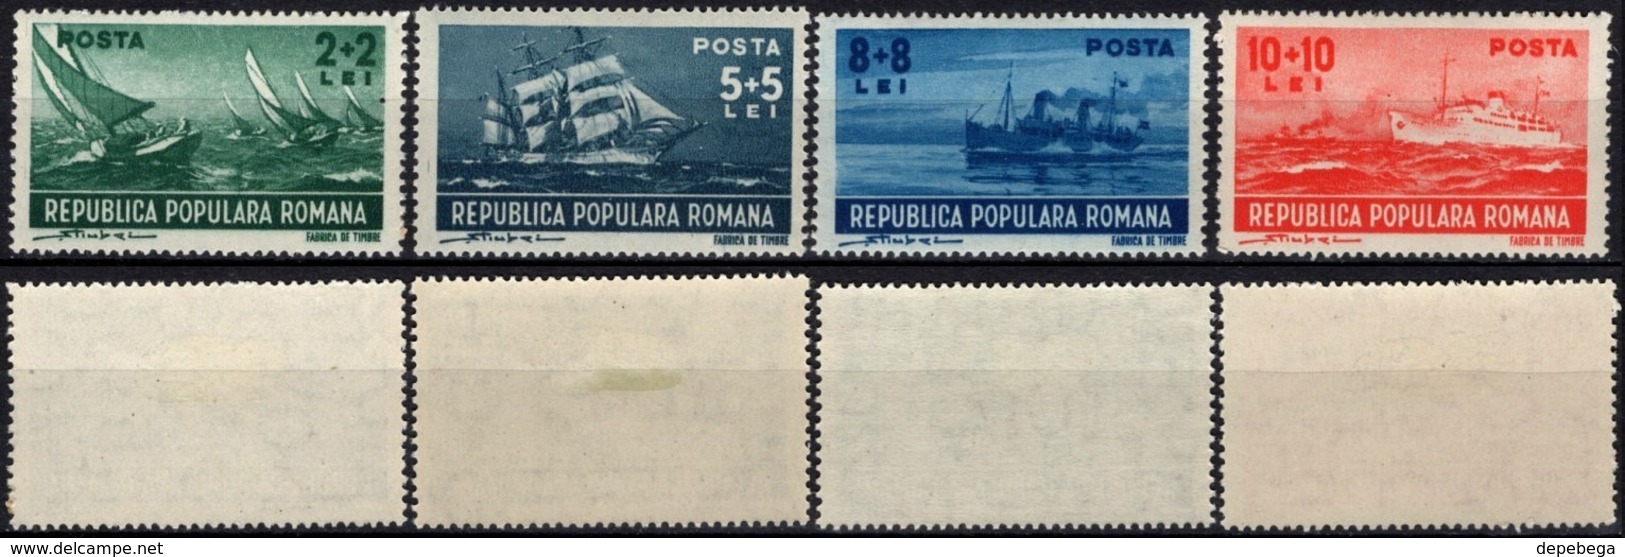 Romania 1948 - R.P.R. Marine, Romanian Ships. MiNr. 1149-1152 MH Set. - Nuovi